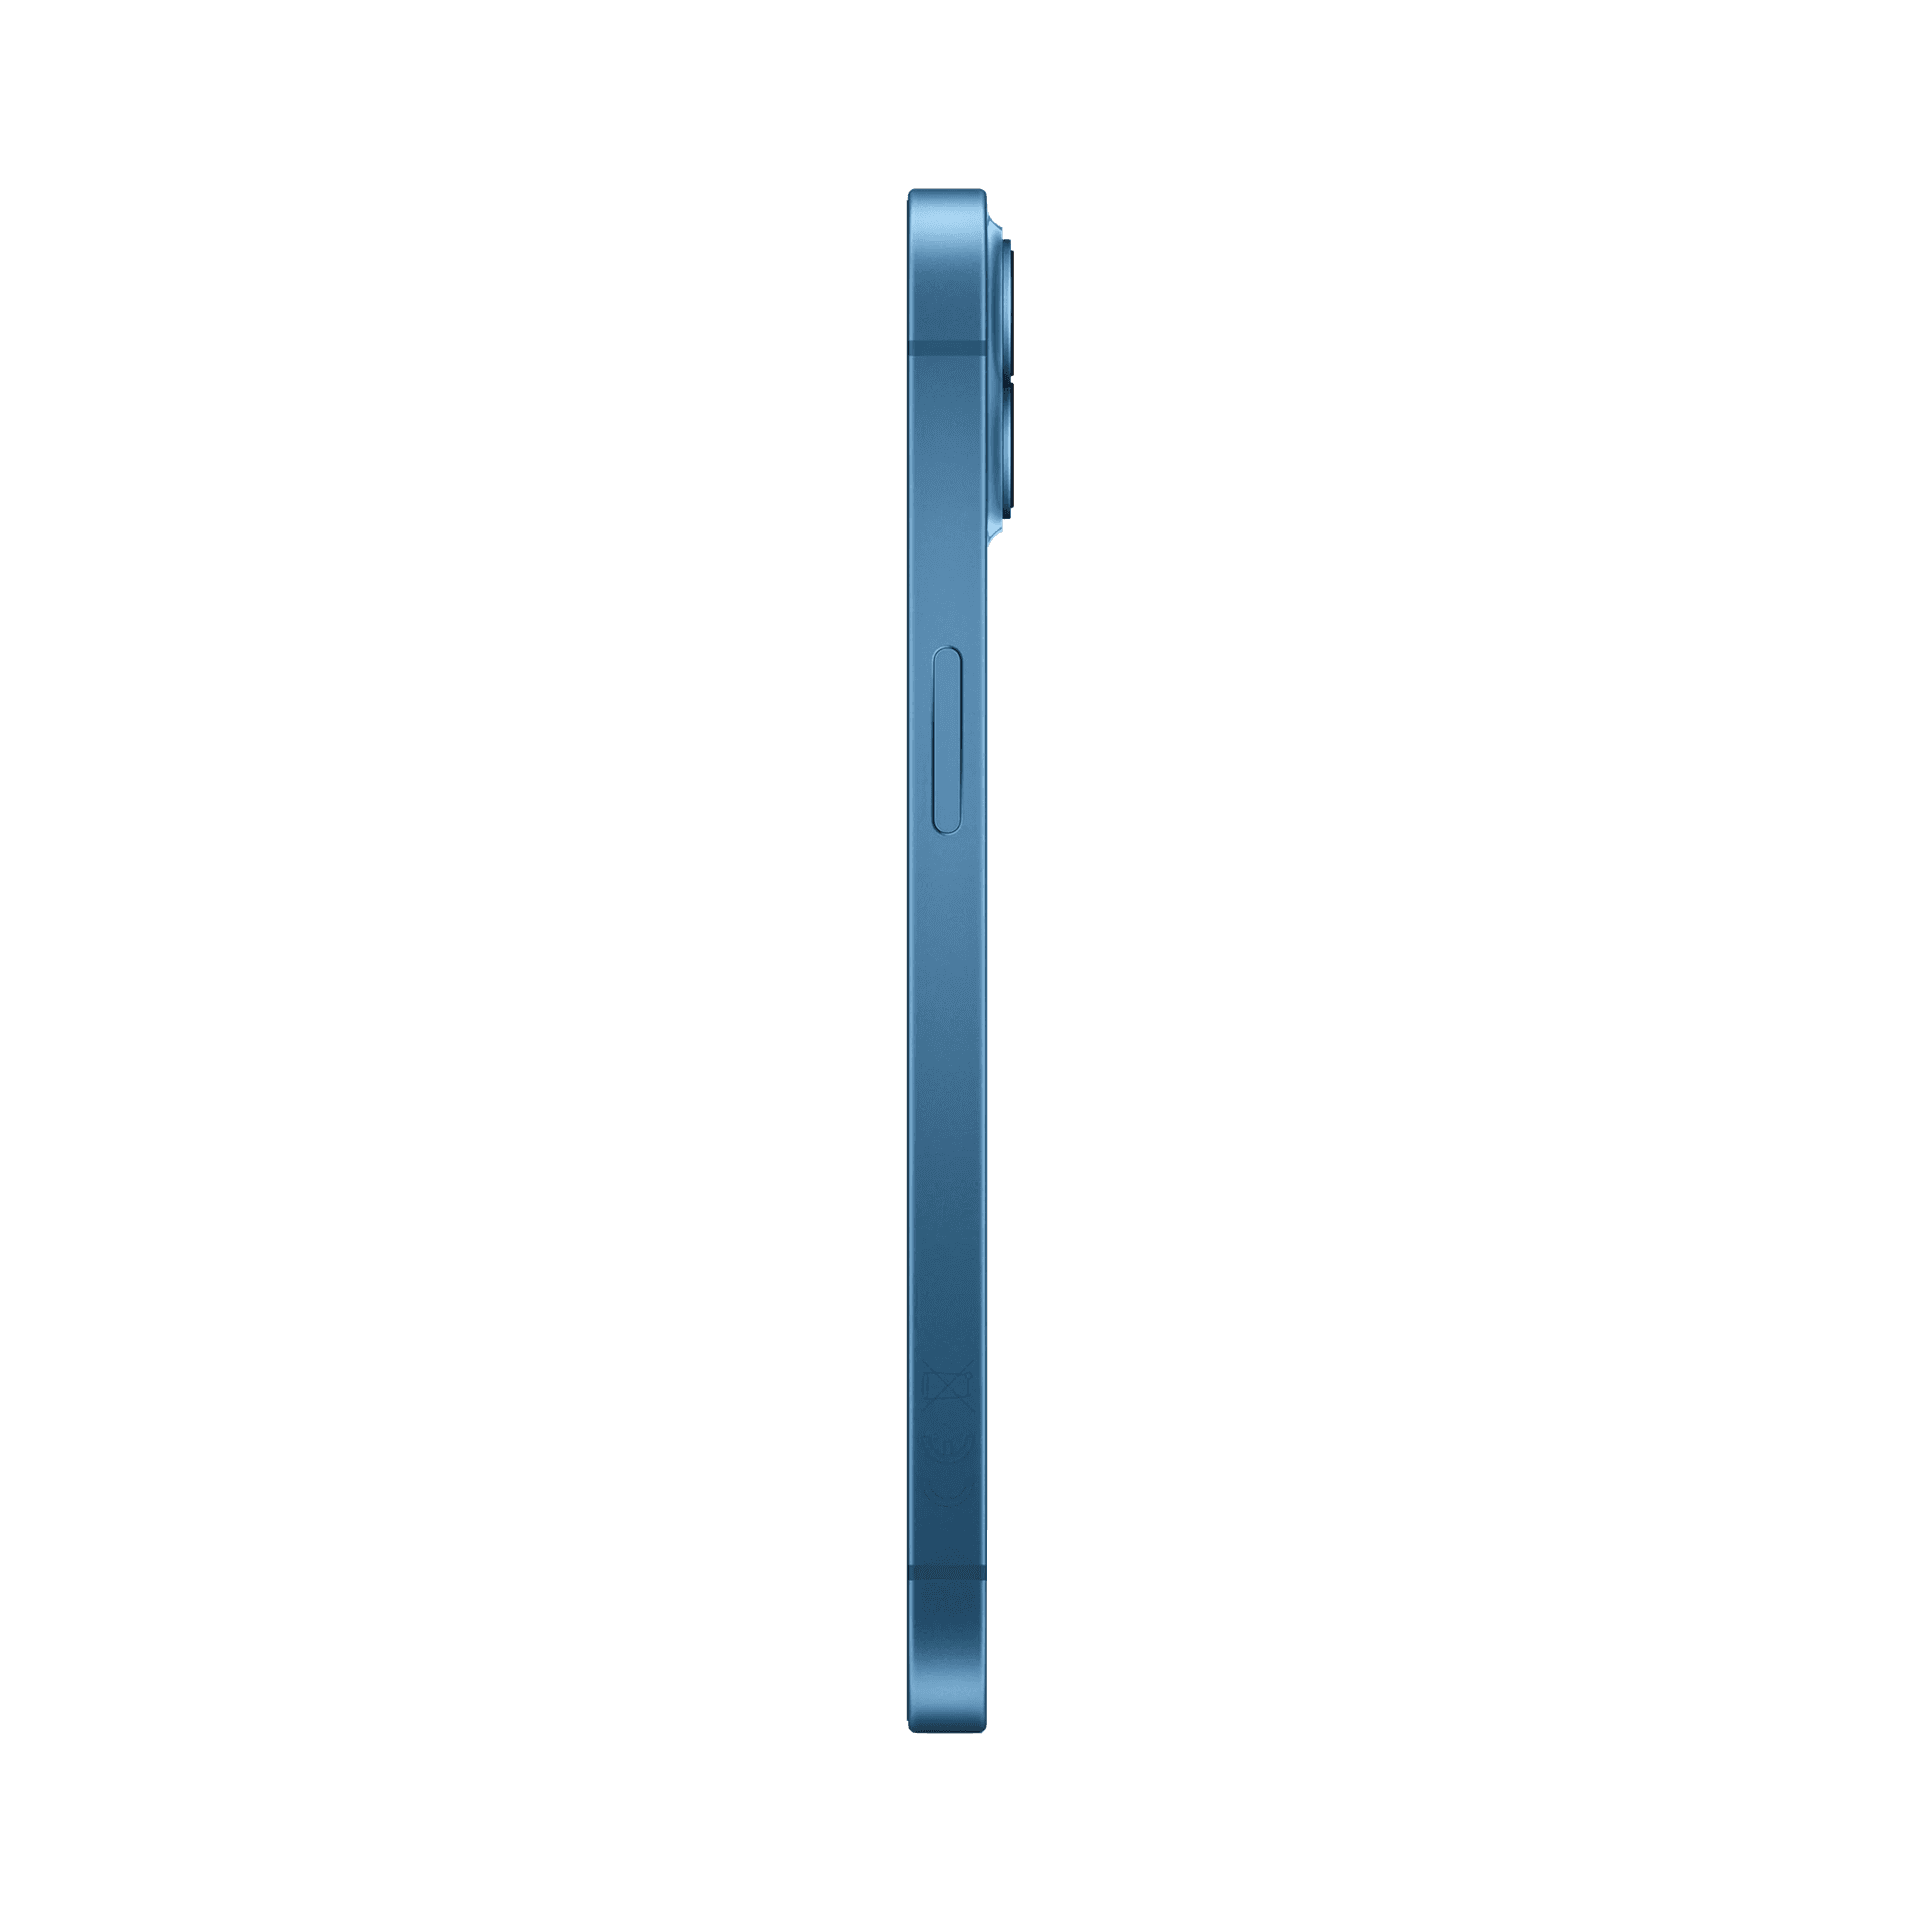 Apple iPhone 13 mini - 128 GB - Mavi